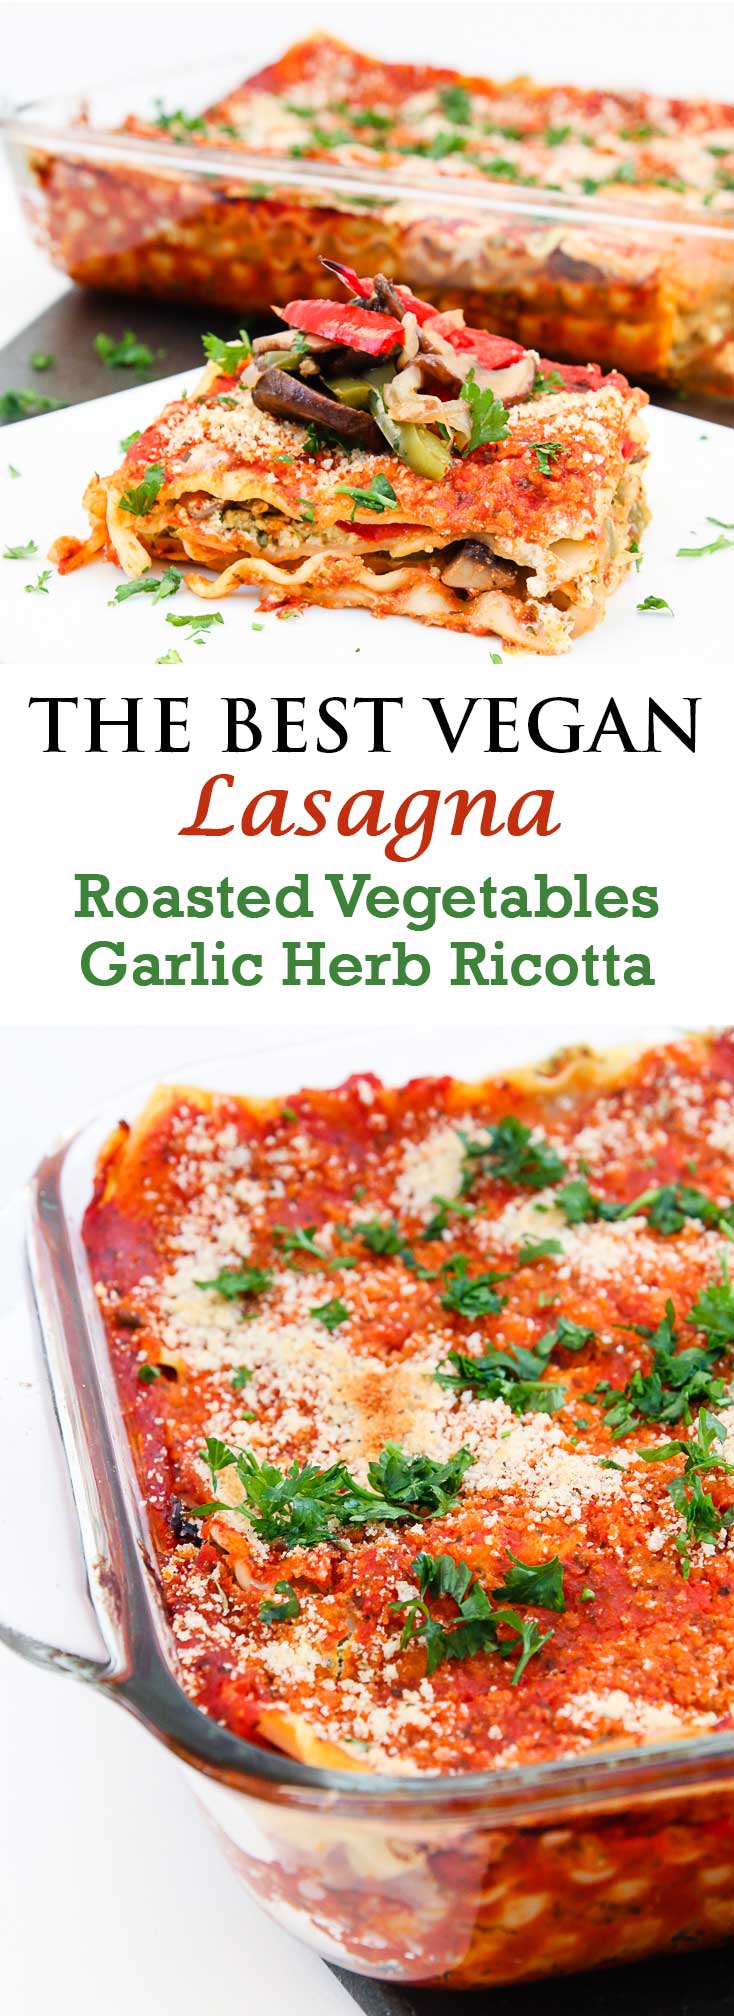 Vegan Lasagna Recipe with Roasted Veggies and Garlic Herb Ricotta #vegan #glutenfree | www.vegetariangastronomy.com